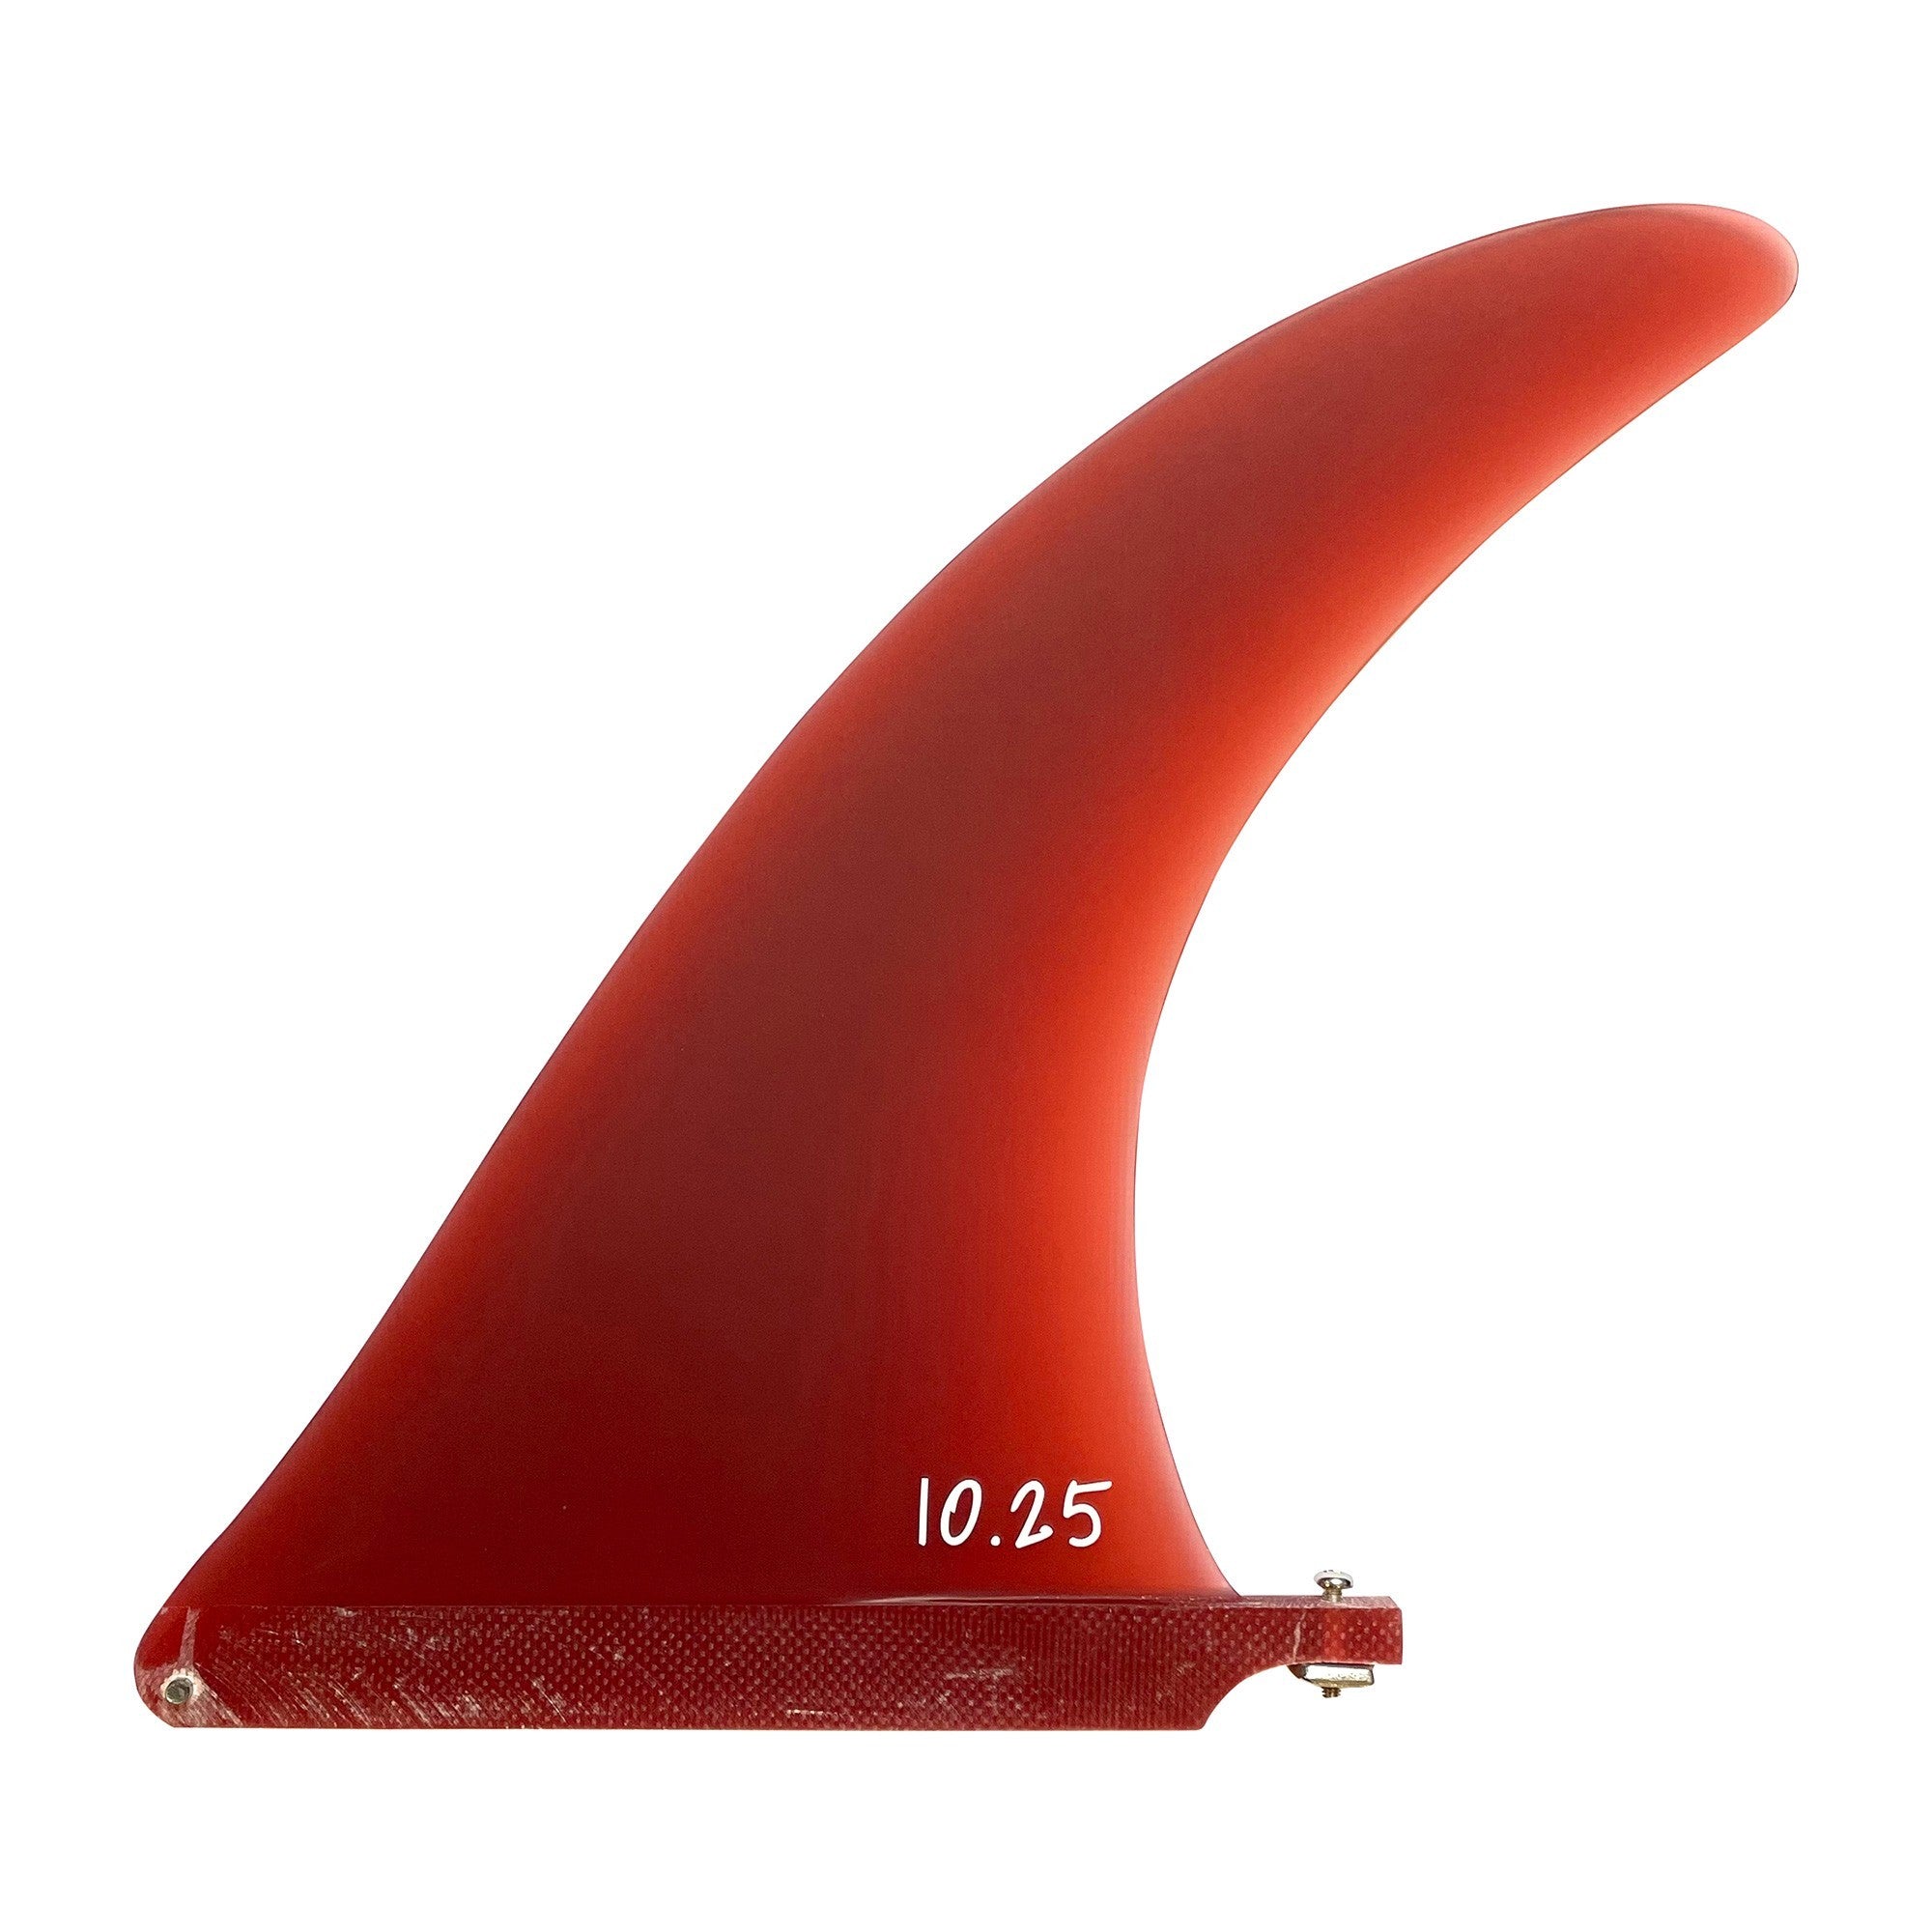 SURF SYSTEM - Dolphin Fiberglass Single Fin (Us Box) - 10.25" - Red